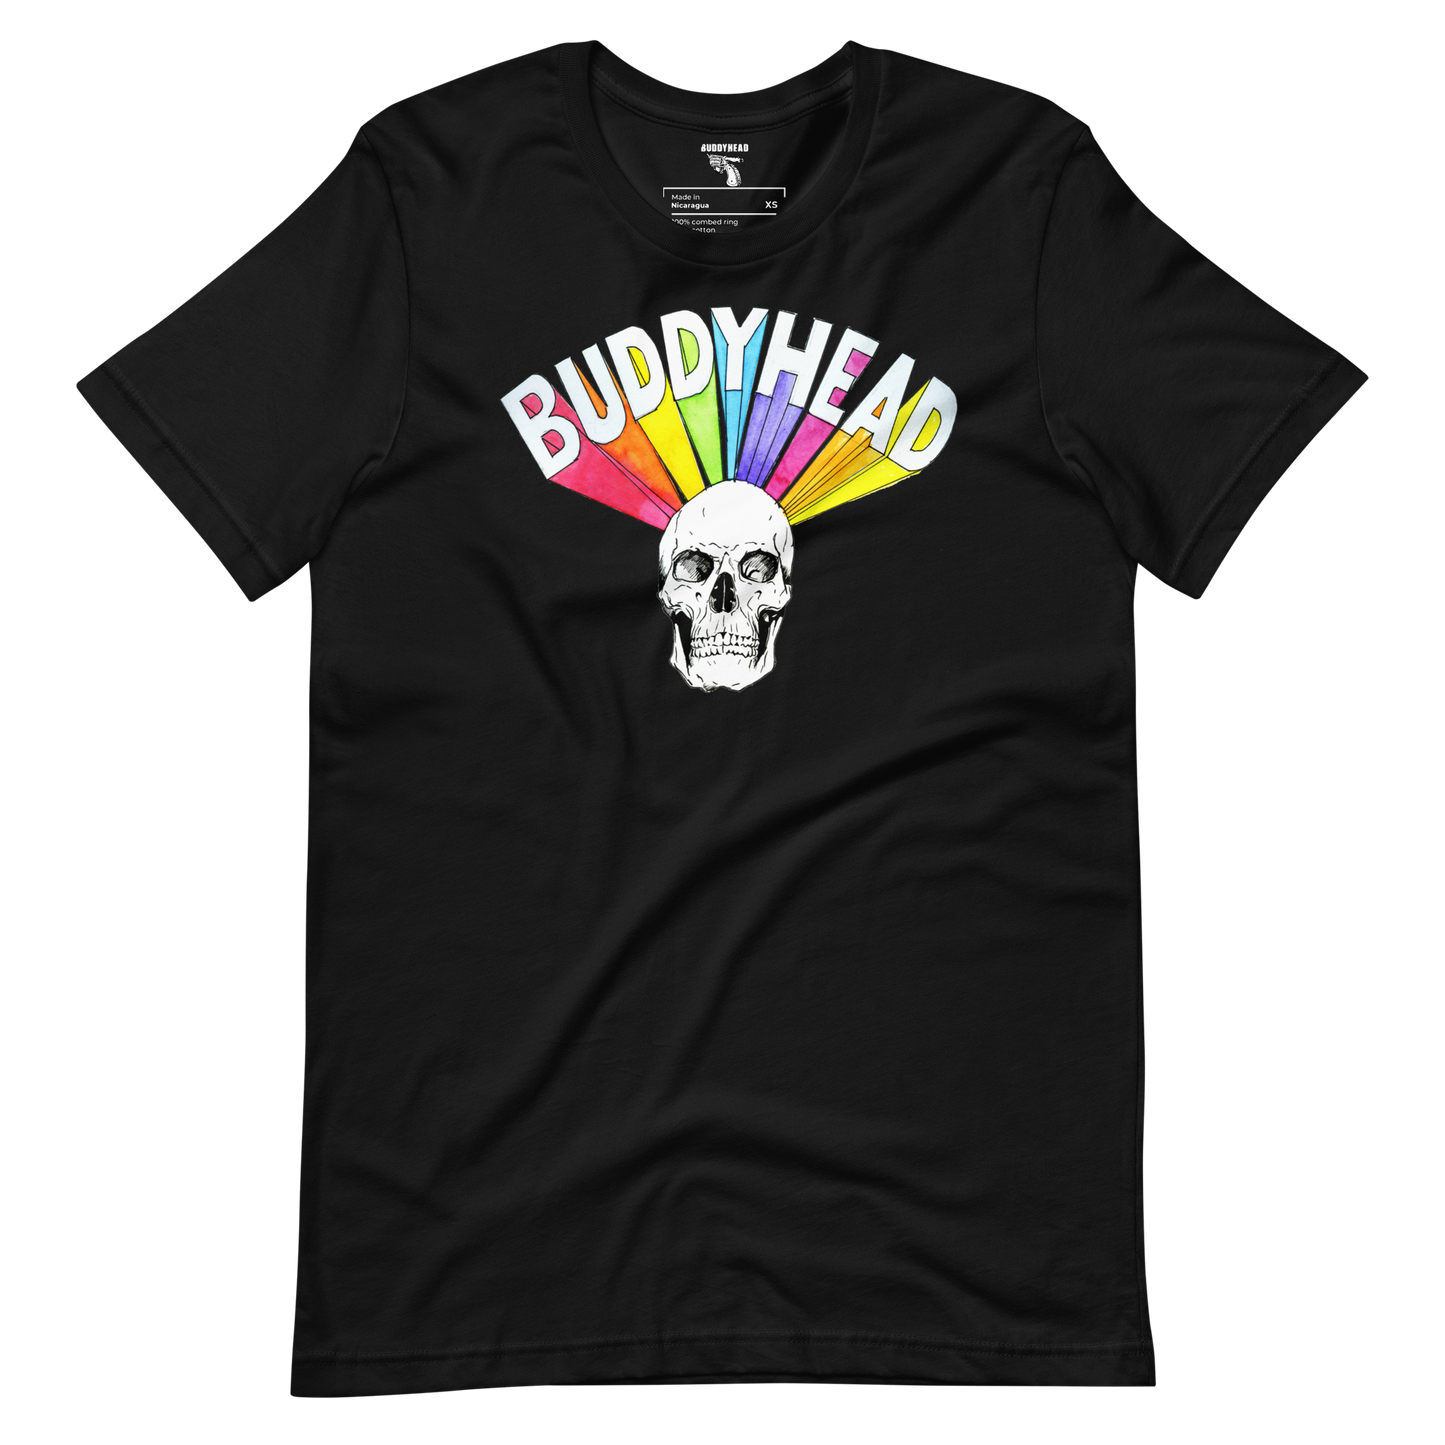 Buddyhead Rainbow Skull logo tee.